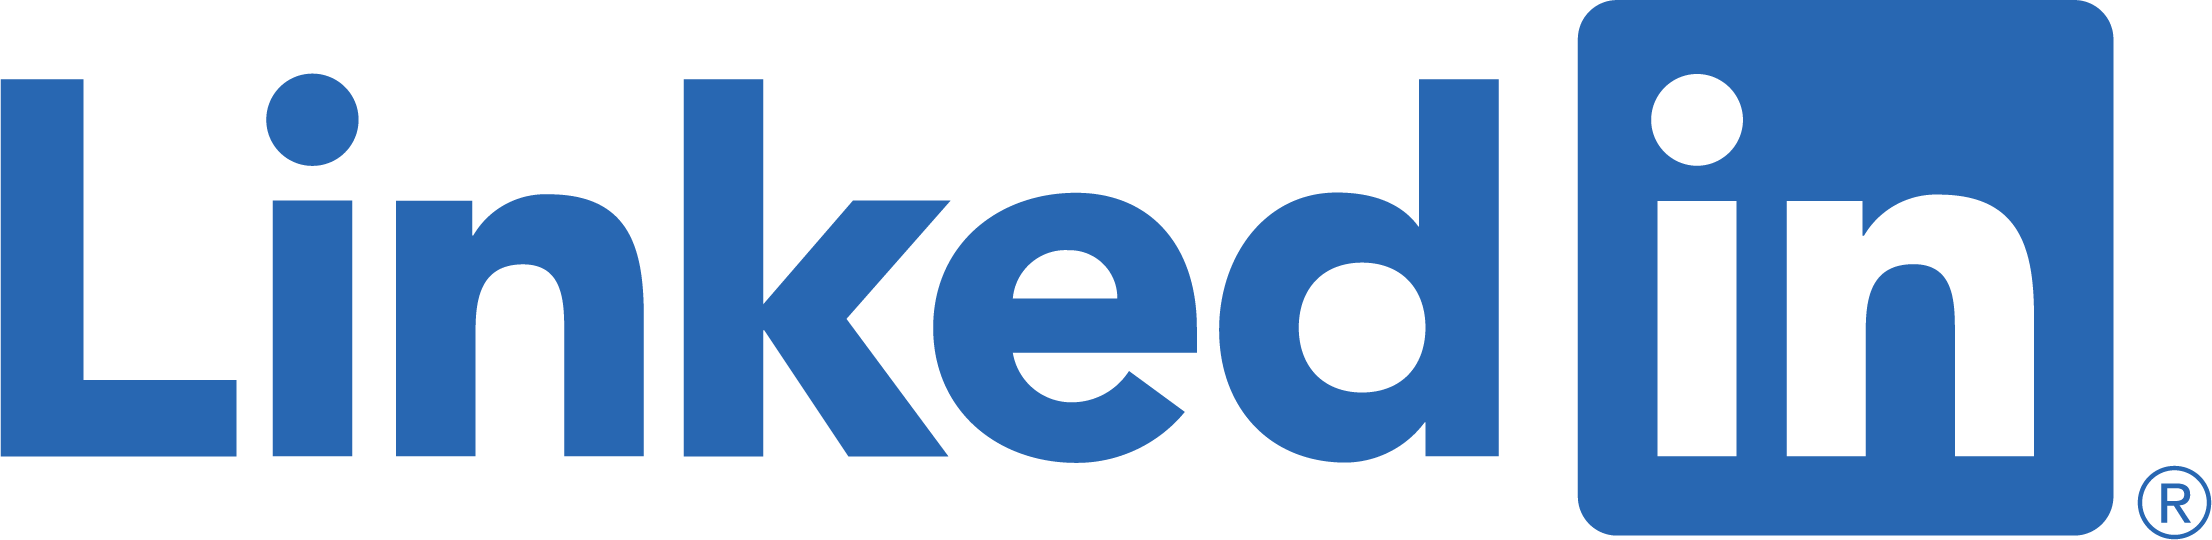 LinkedIn-logo-blue